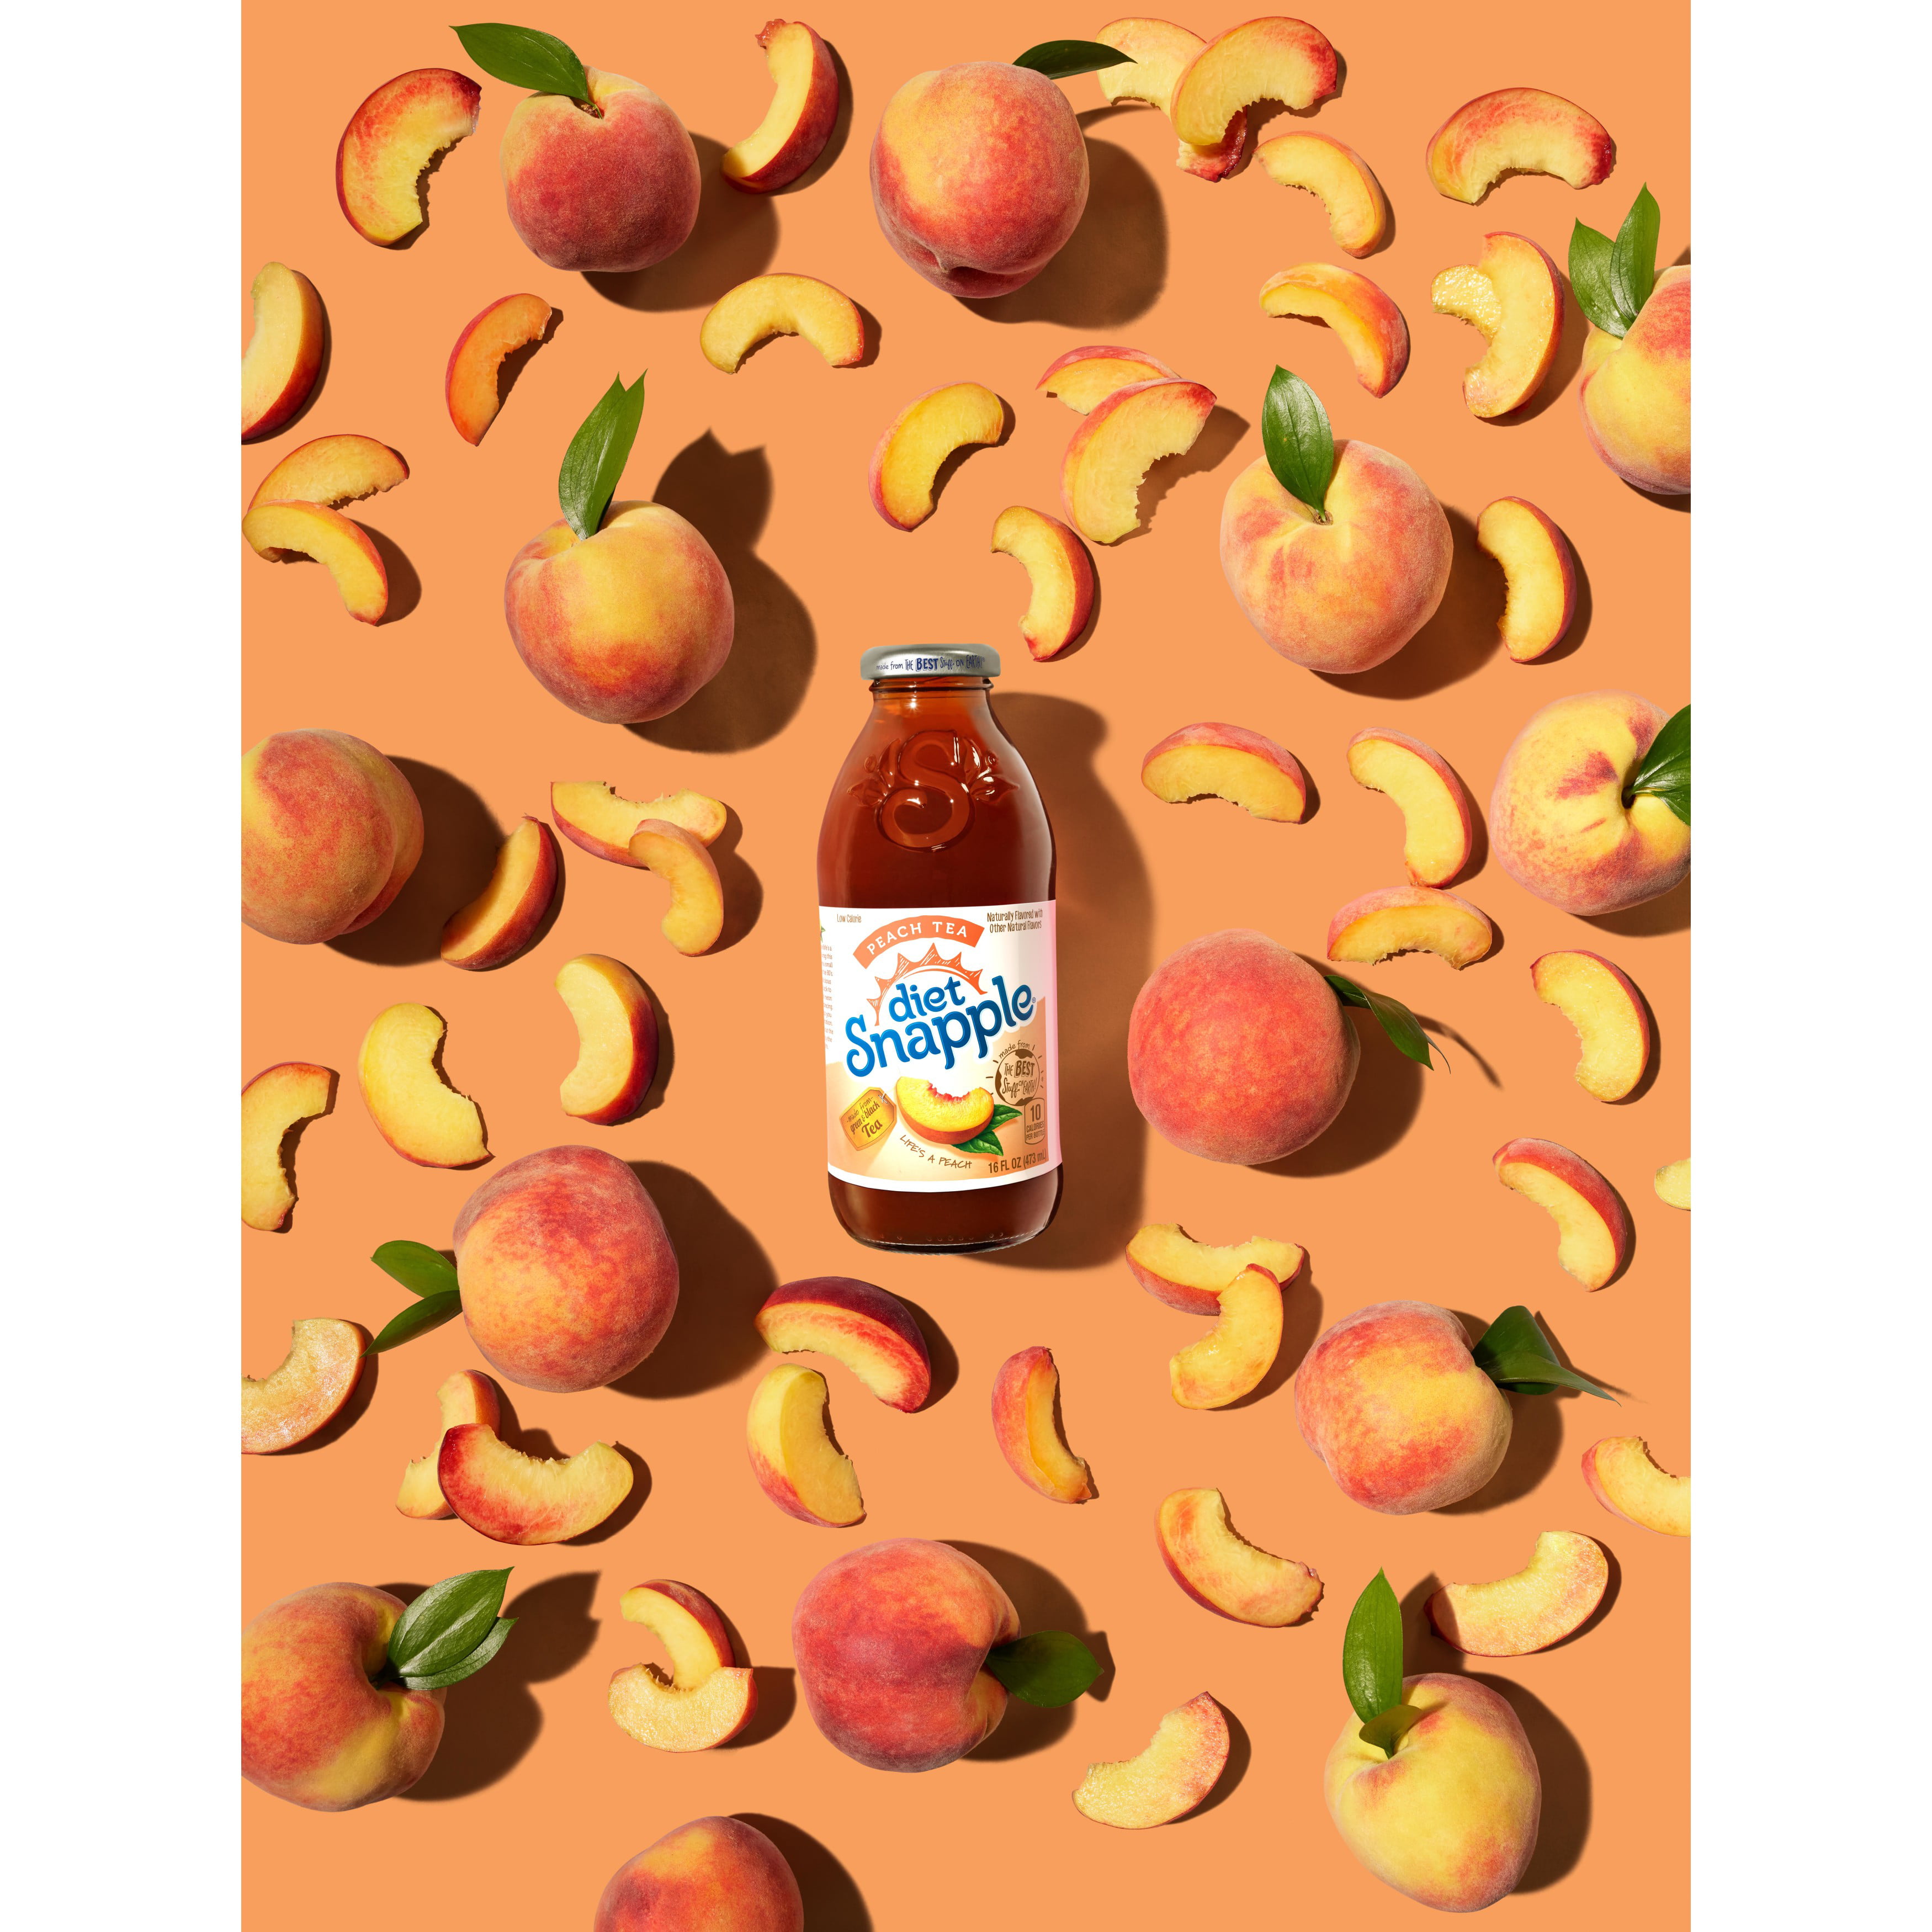 Snapple All Natural Diet Peach Tea, 6 bottles / 16 fl oz - Ralphs